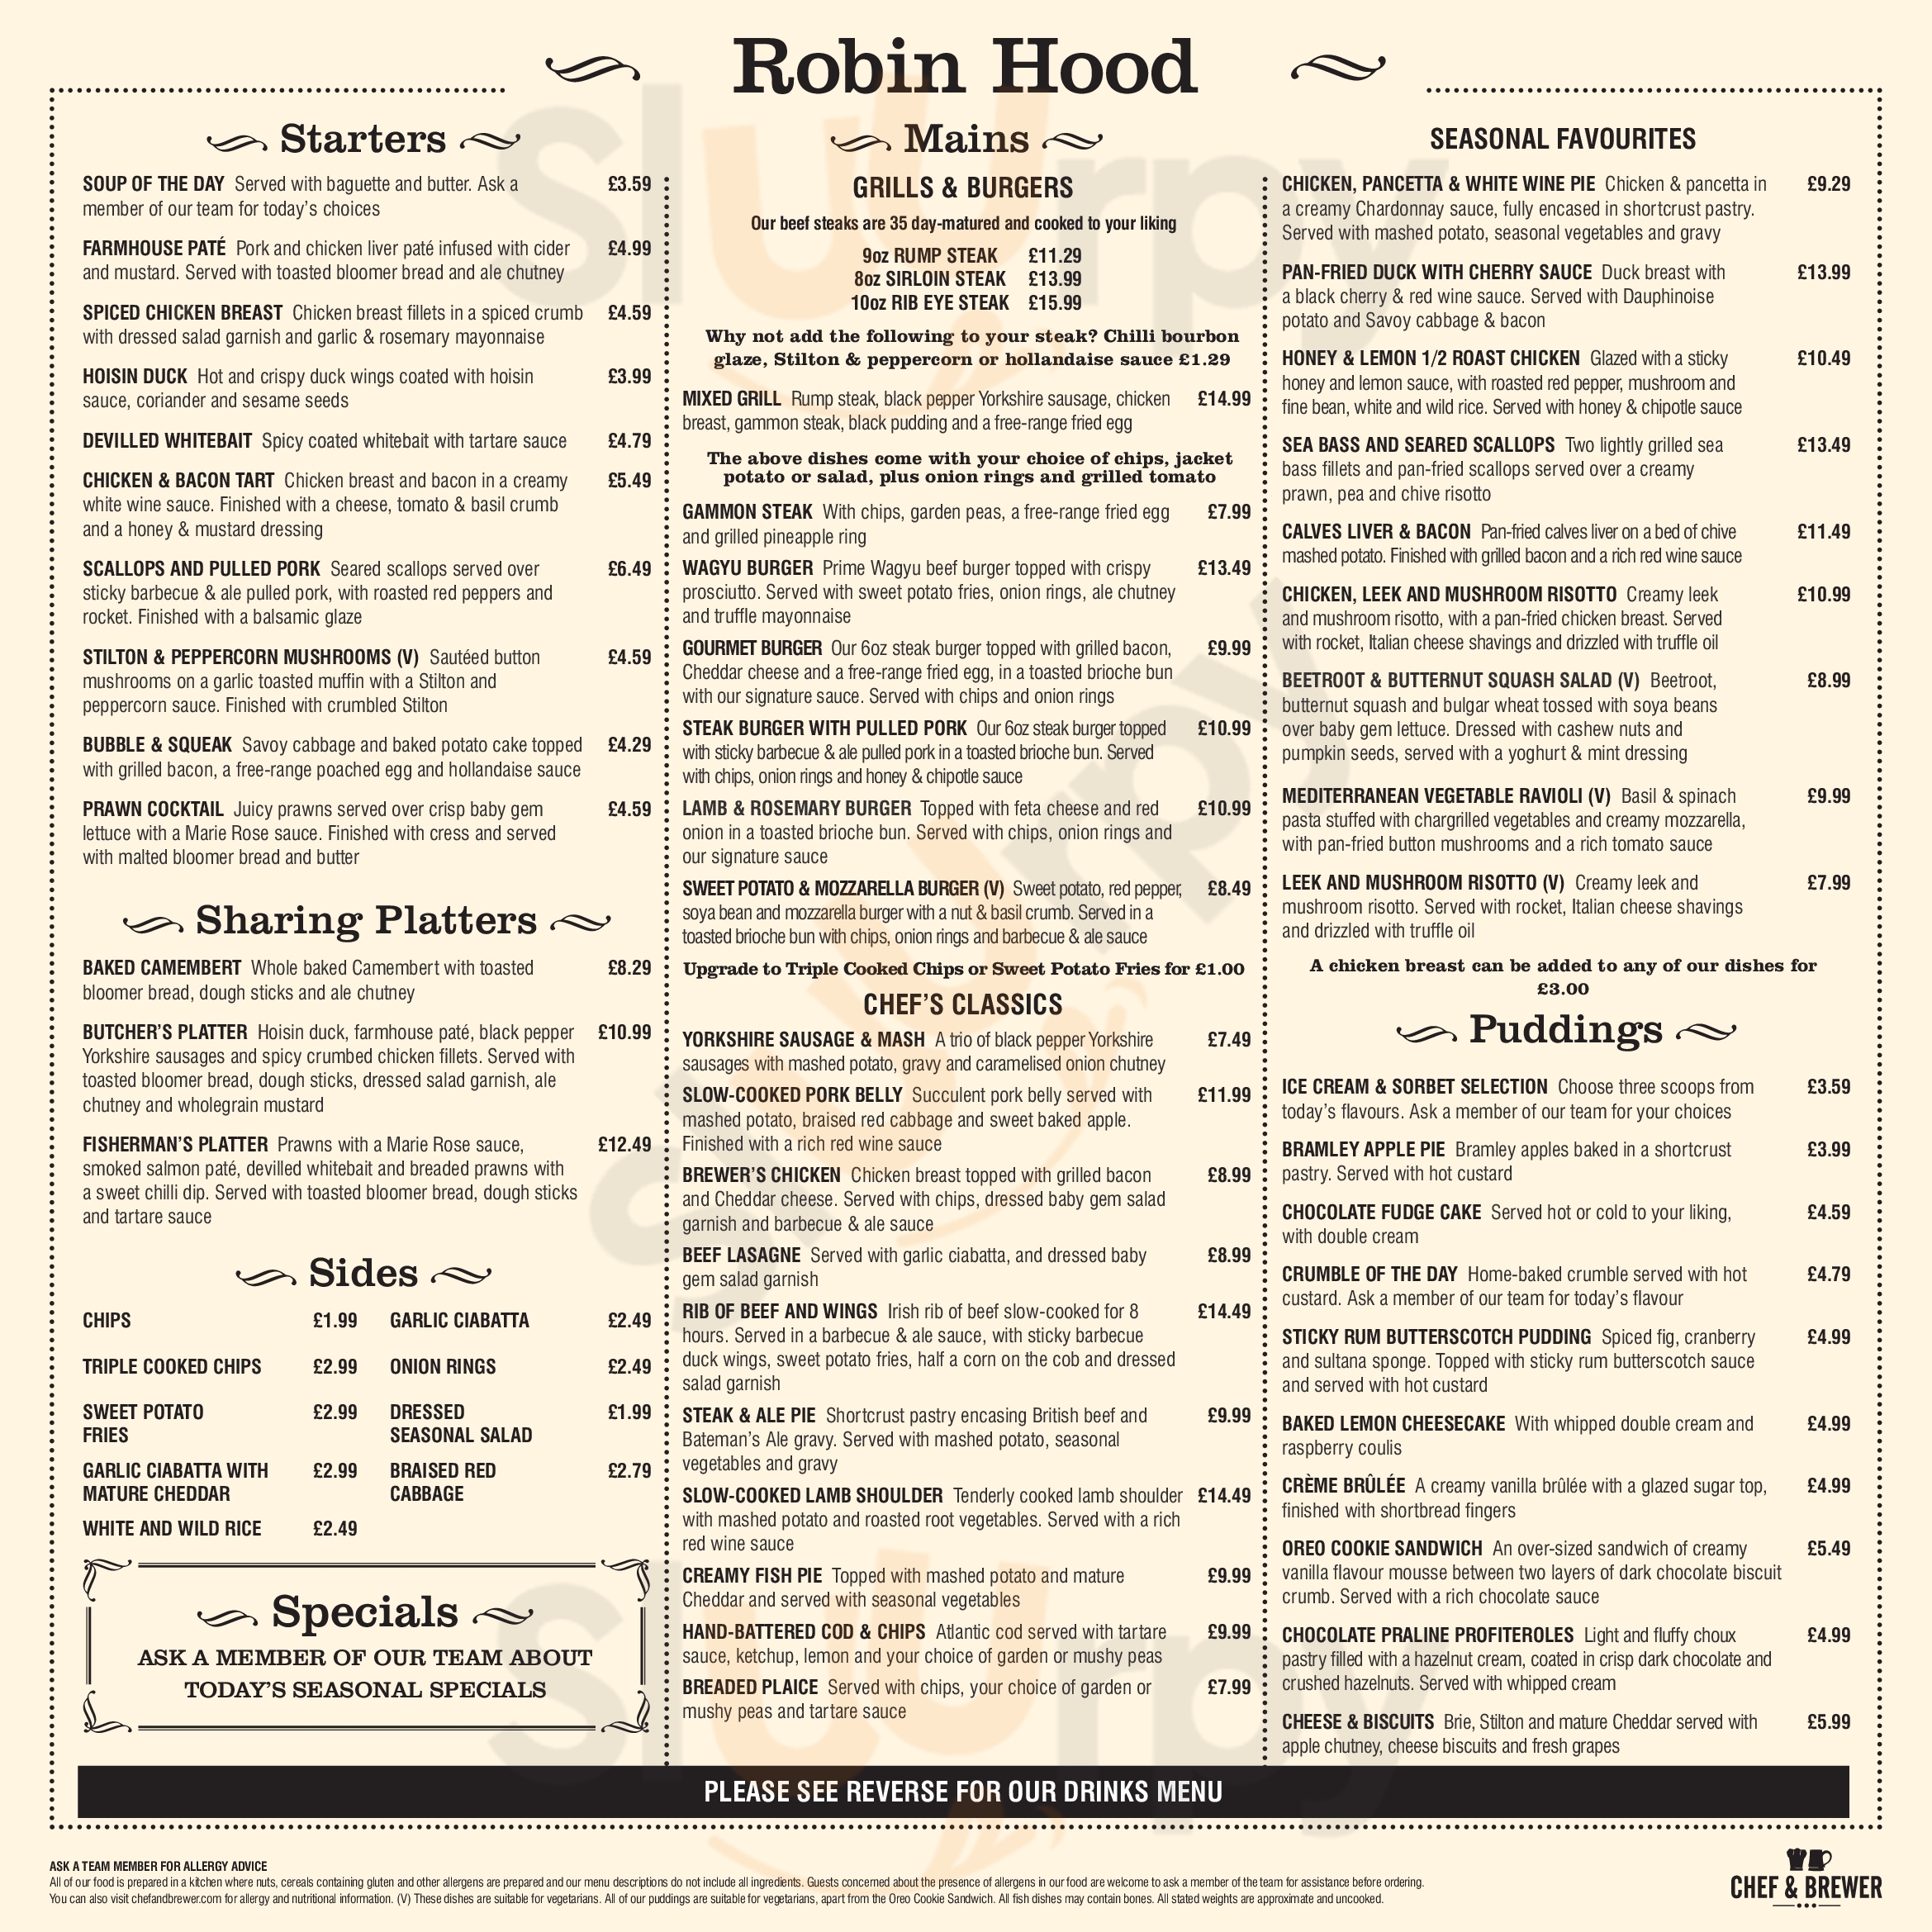 Robin Hood Bognor Regis Menu - 1